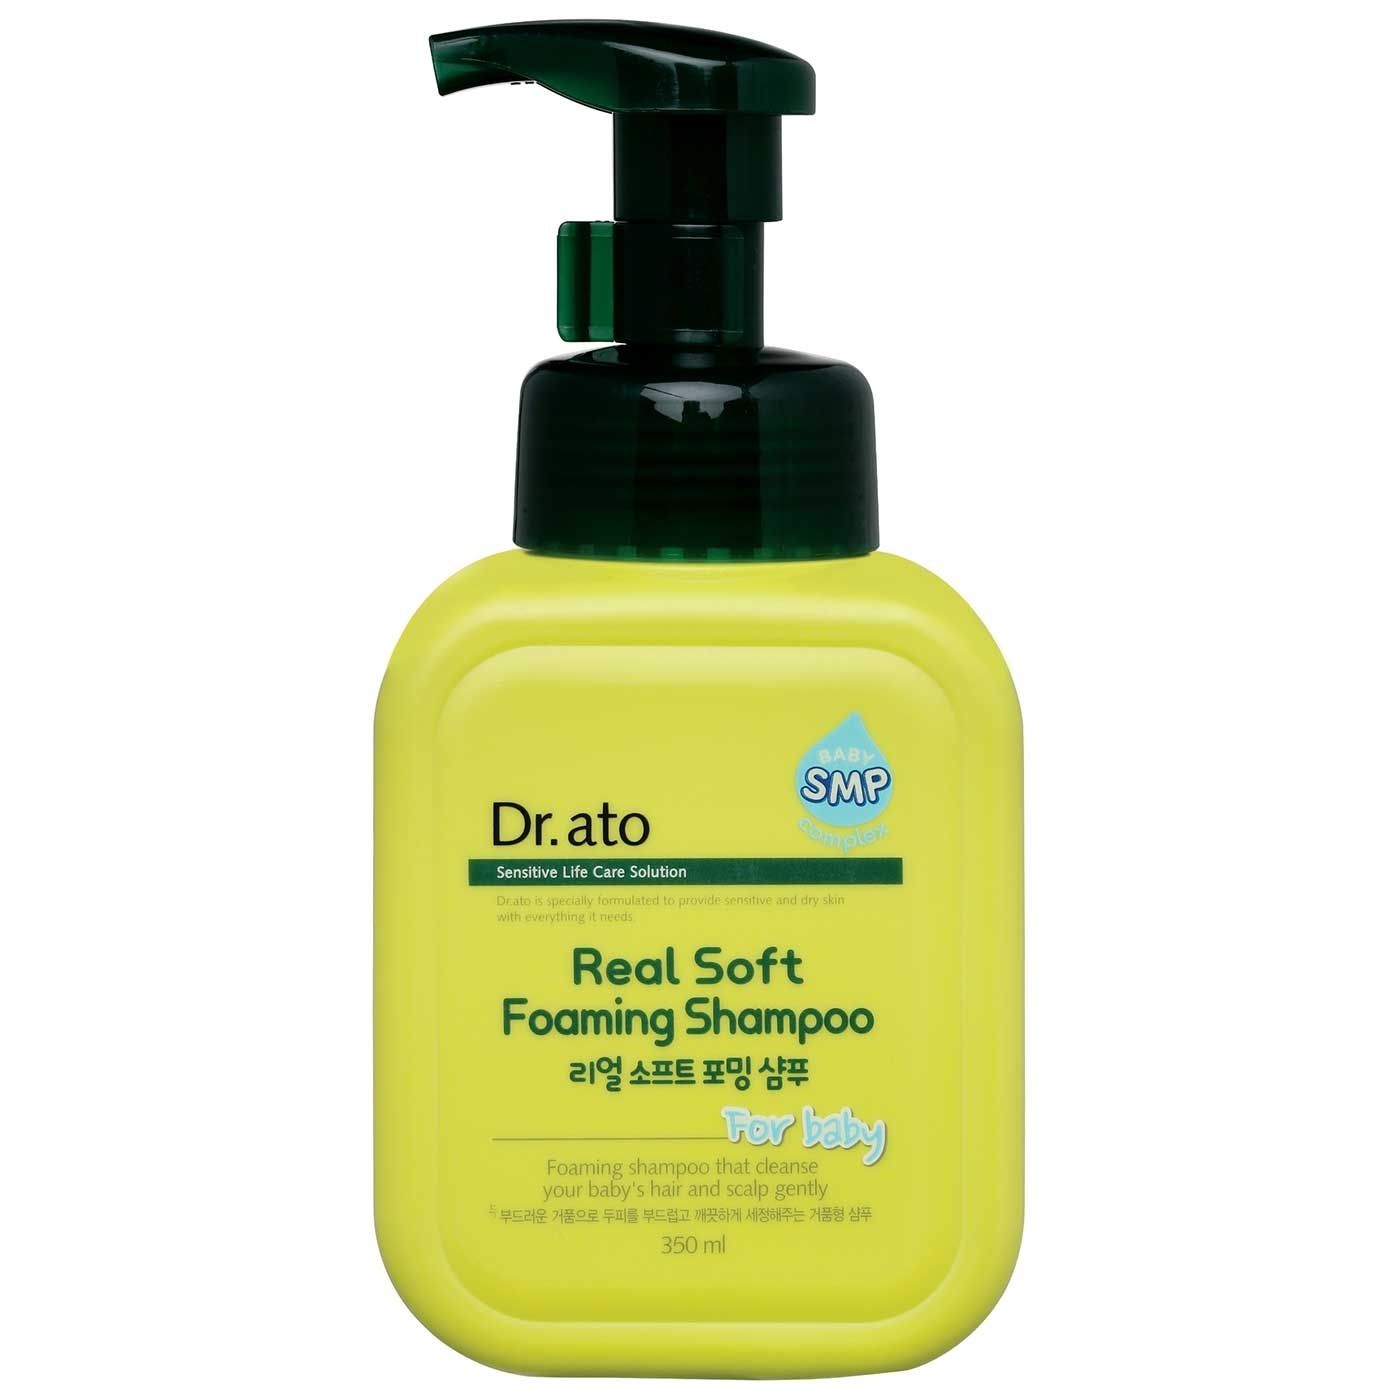 Dr.ato Real Soft Foaming Shampoo 350ml - 1